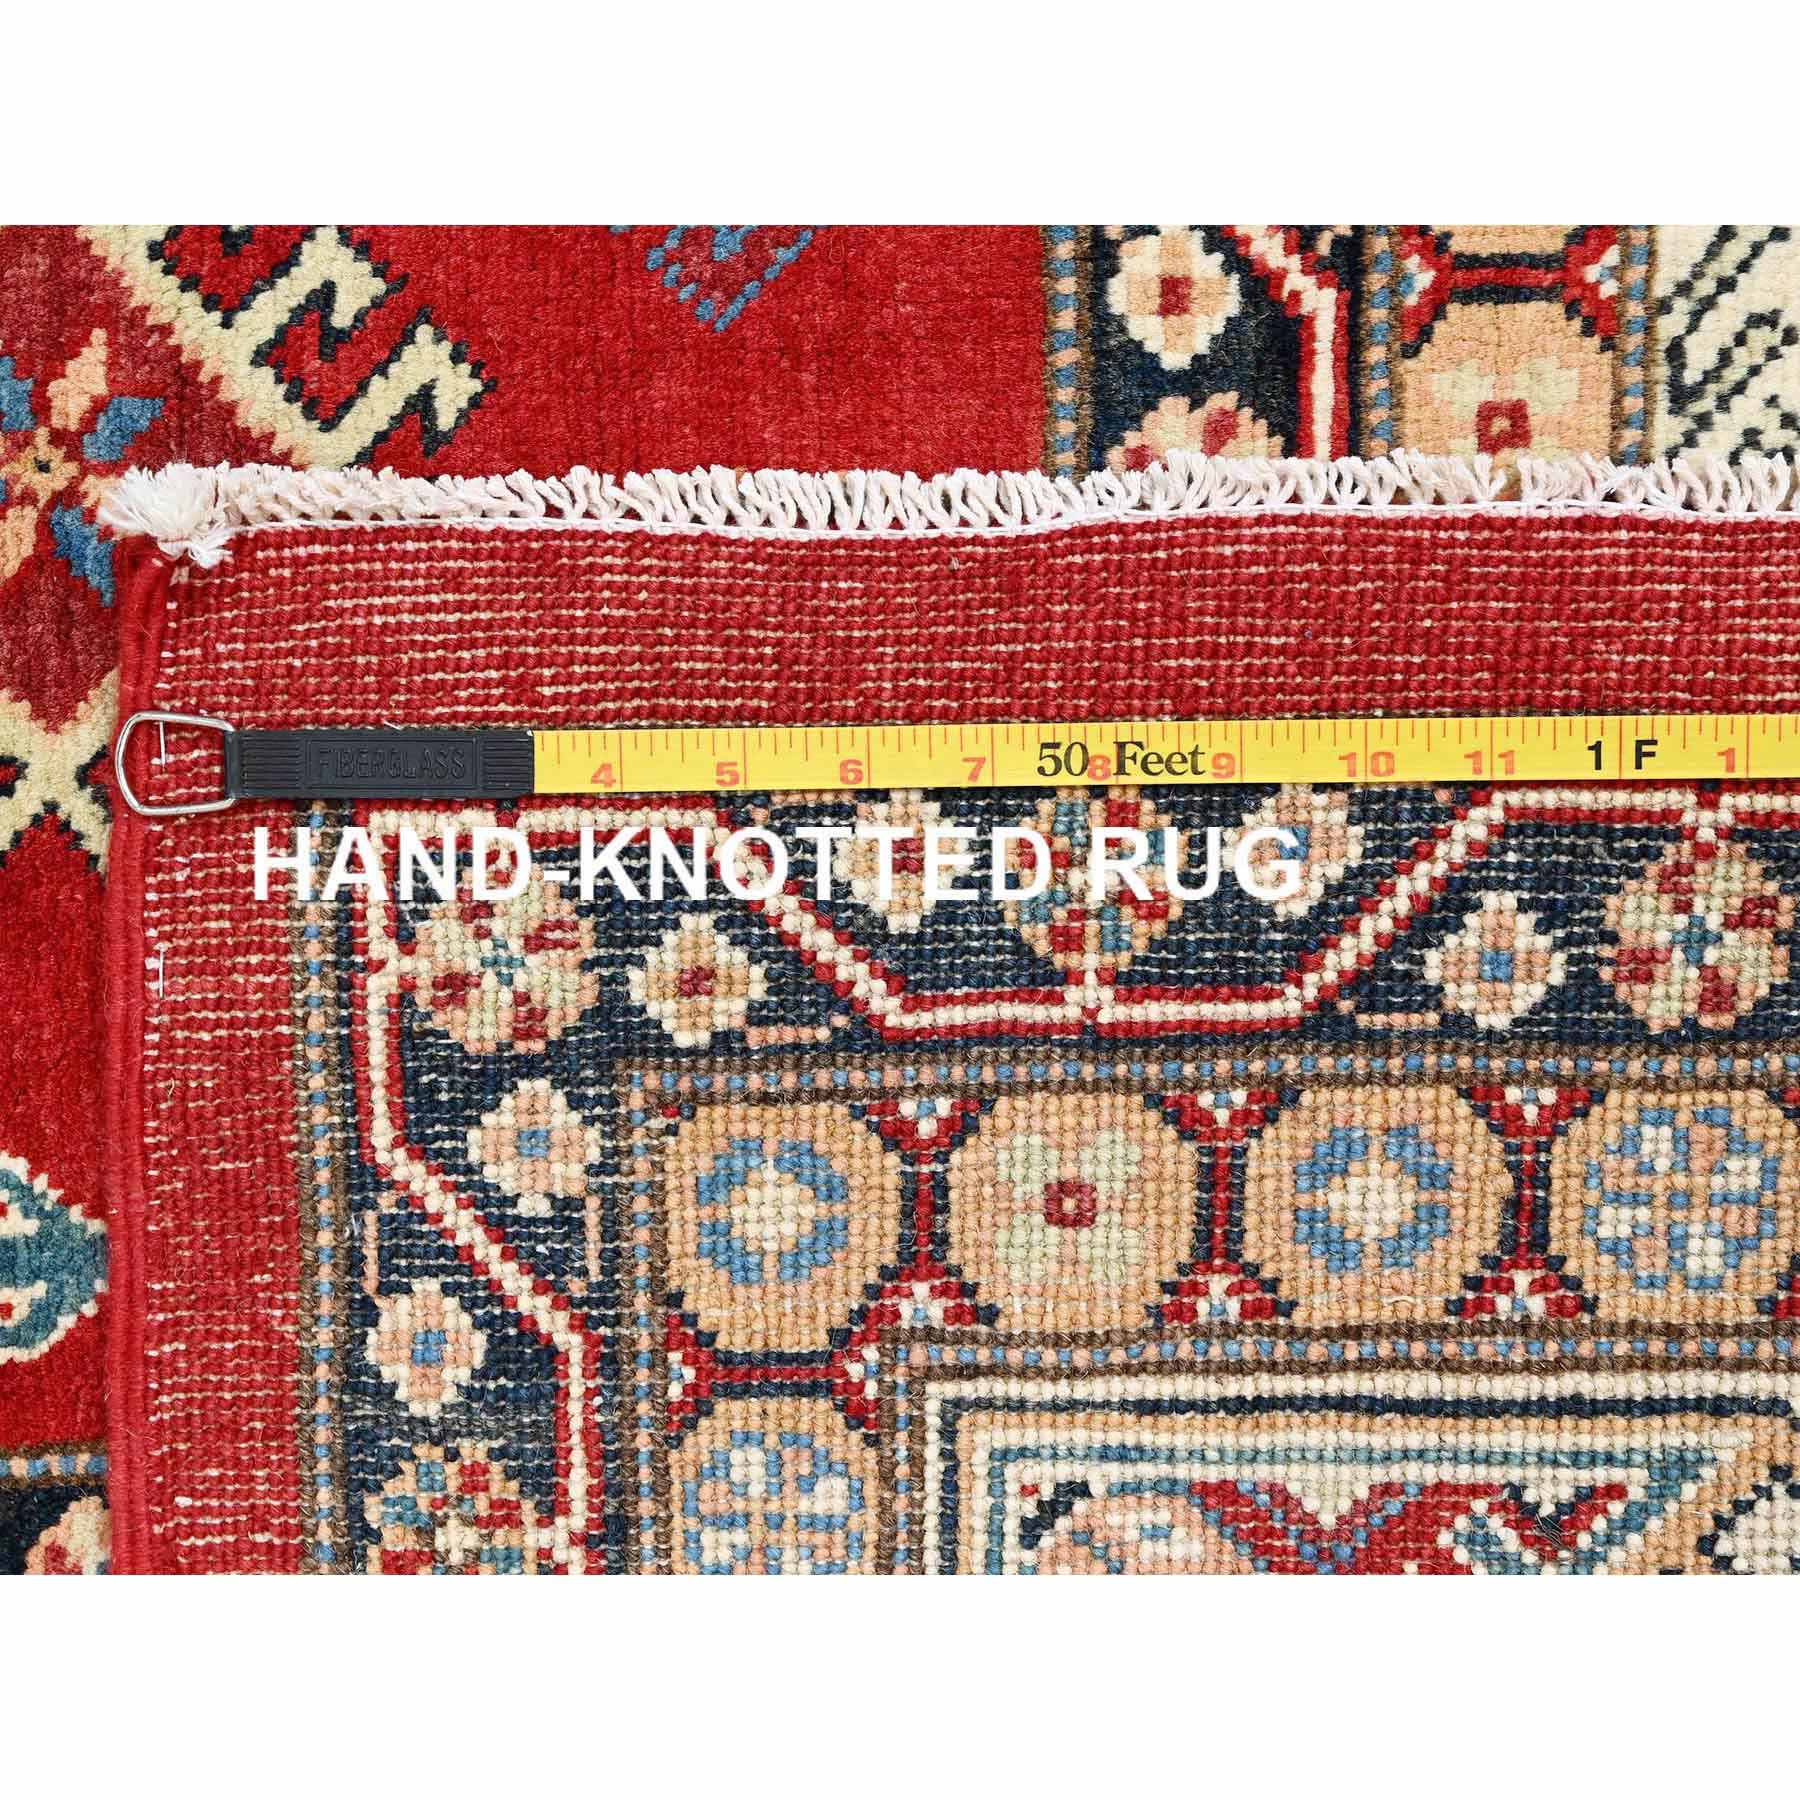 Kazak-Hand-Knotted-Rug-431035